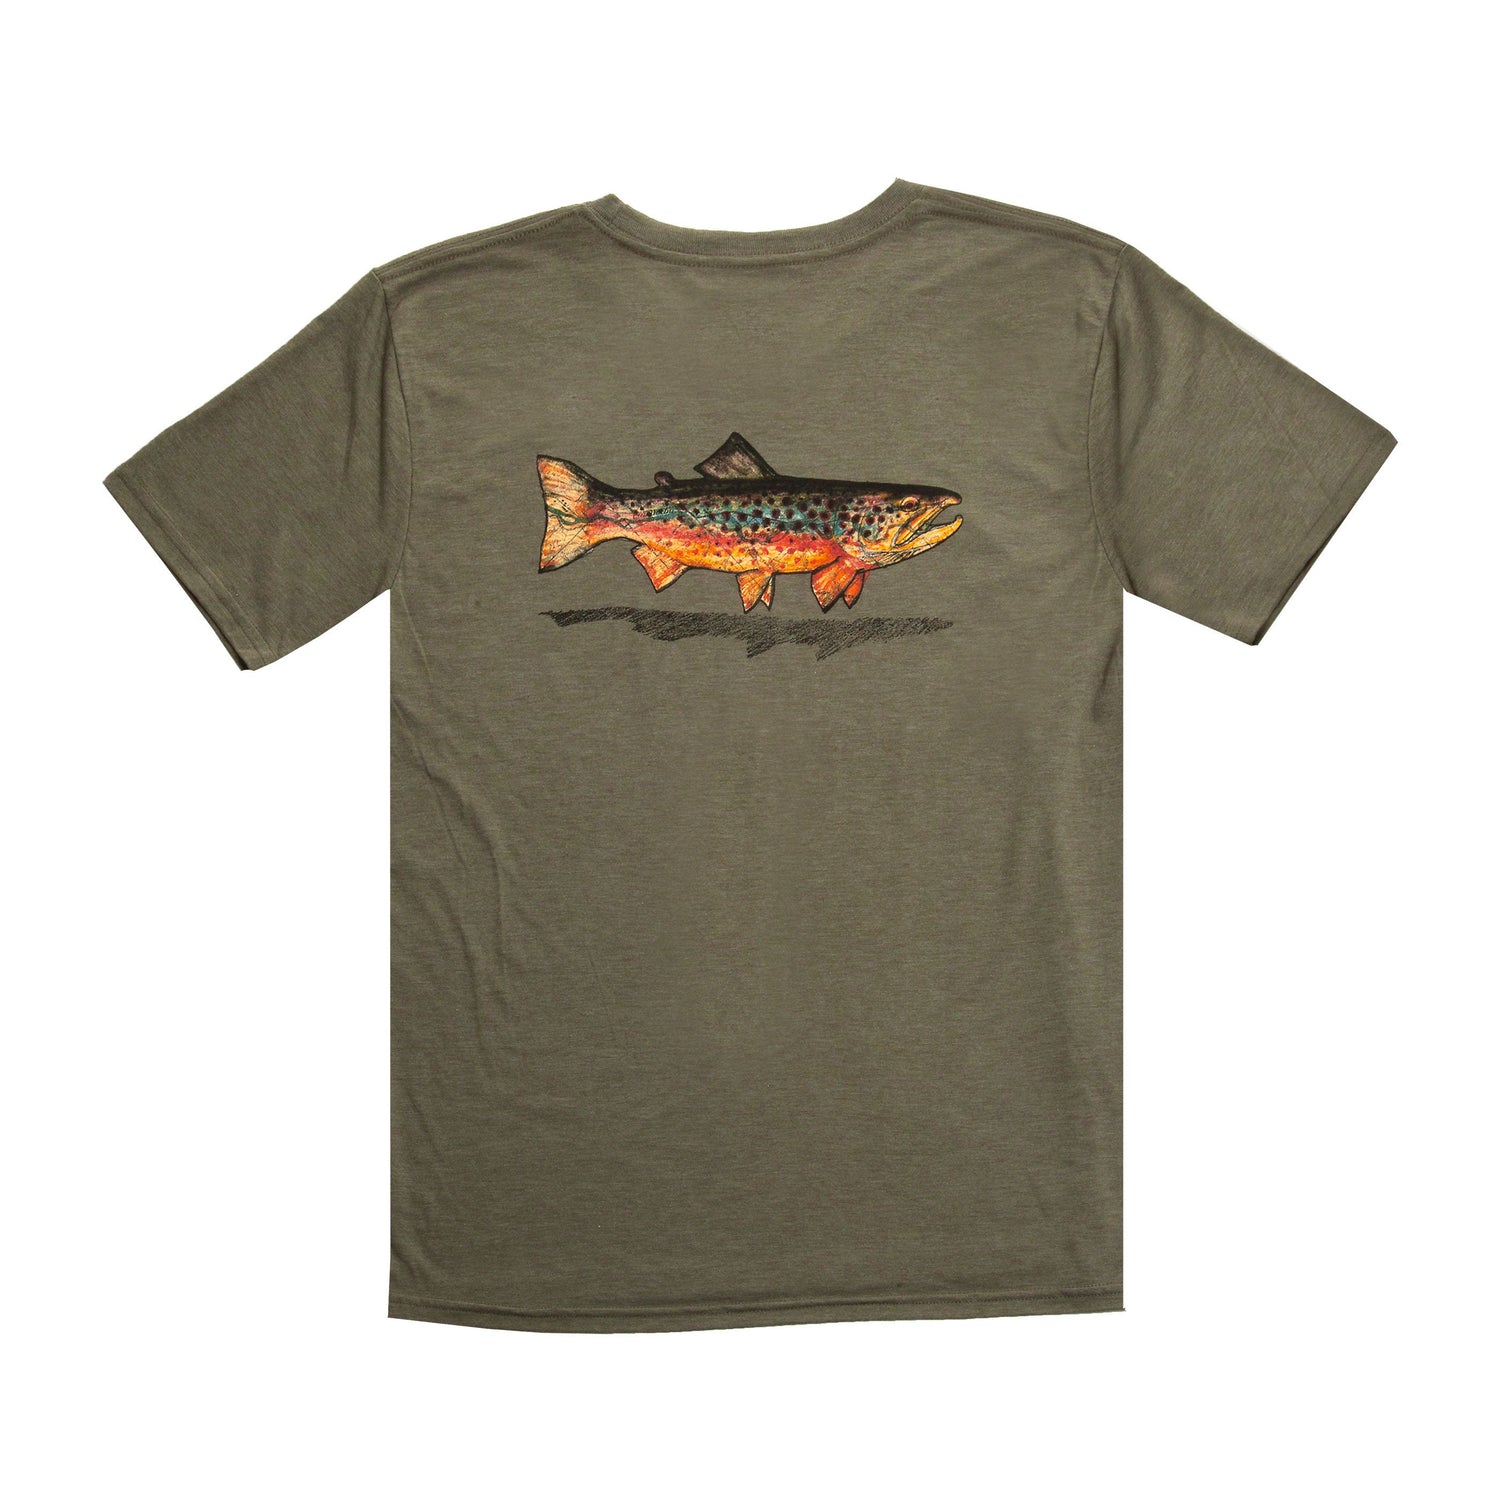 Brown Trout White T-shirt, Fishing T-shirt, Fish T-shirt, Trout